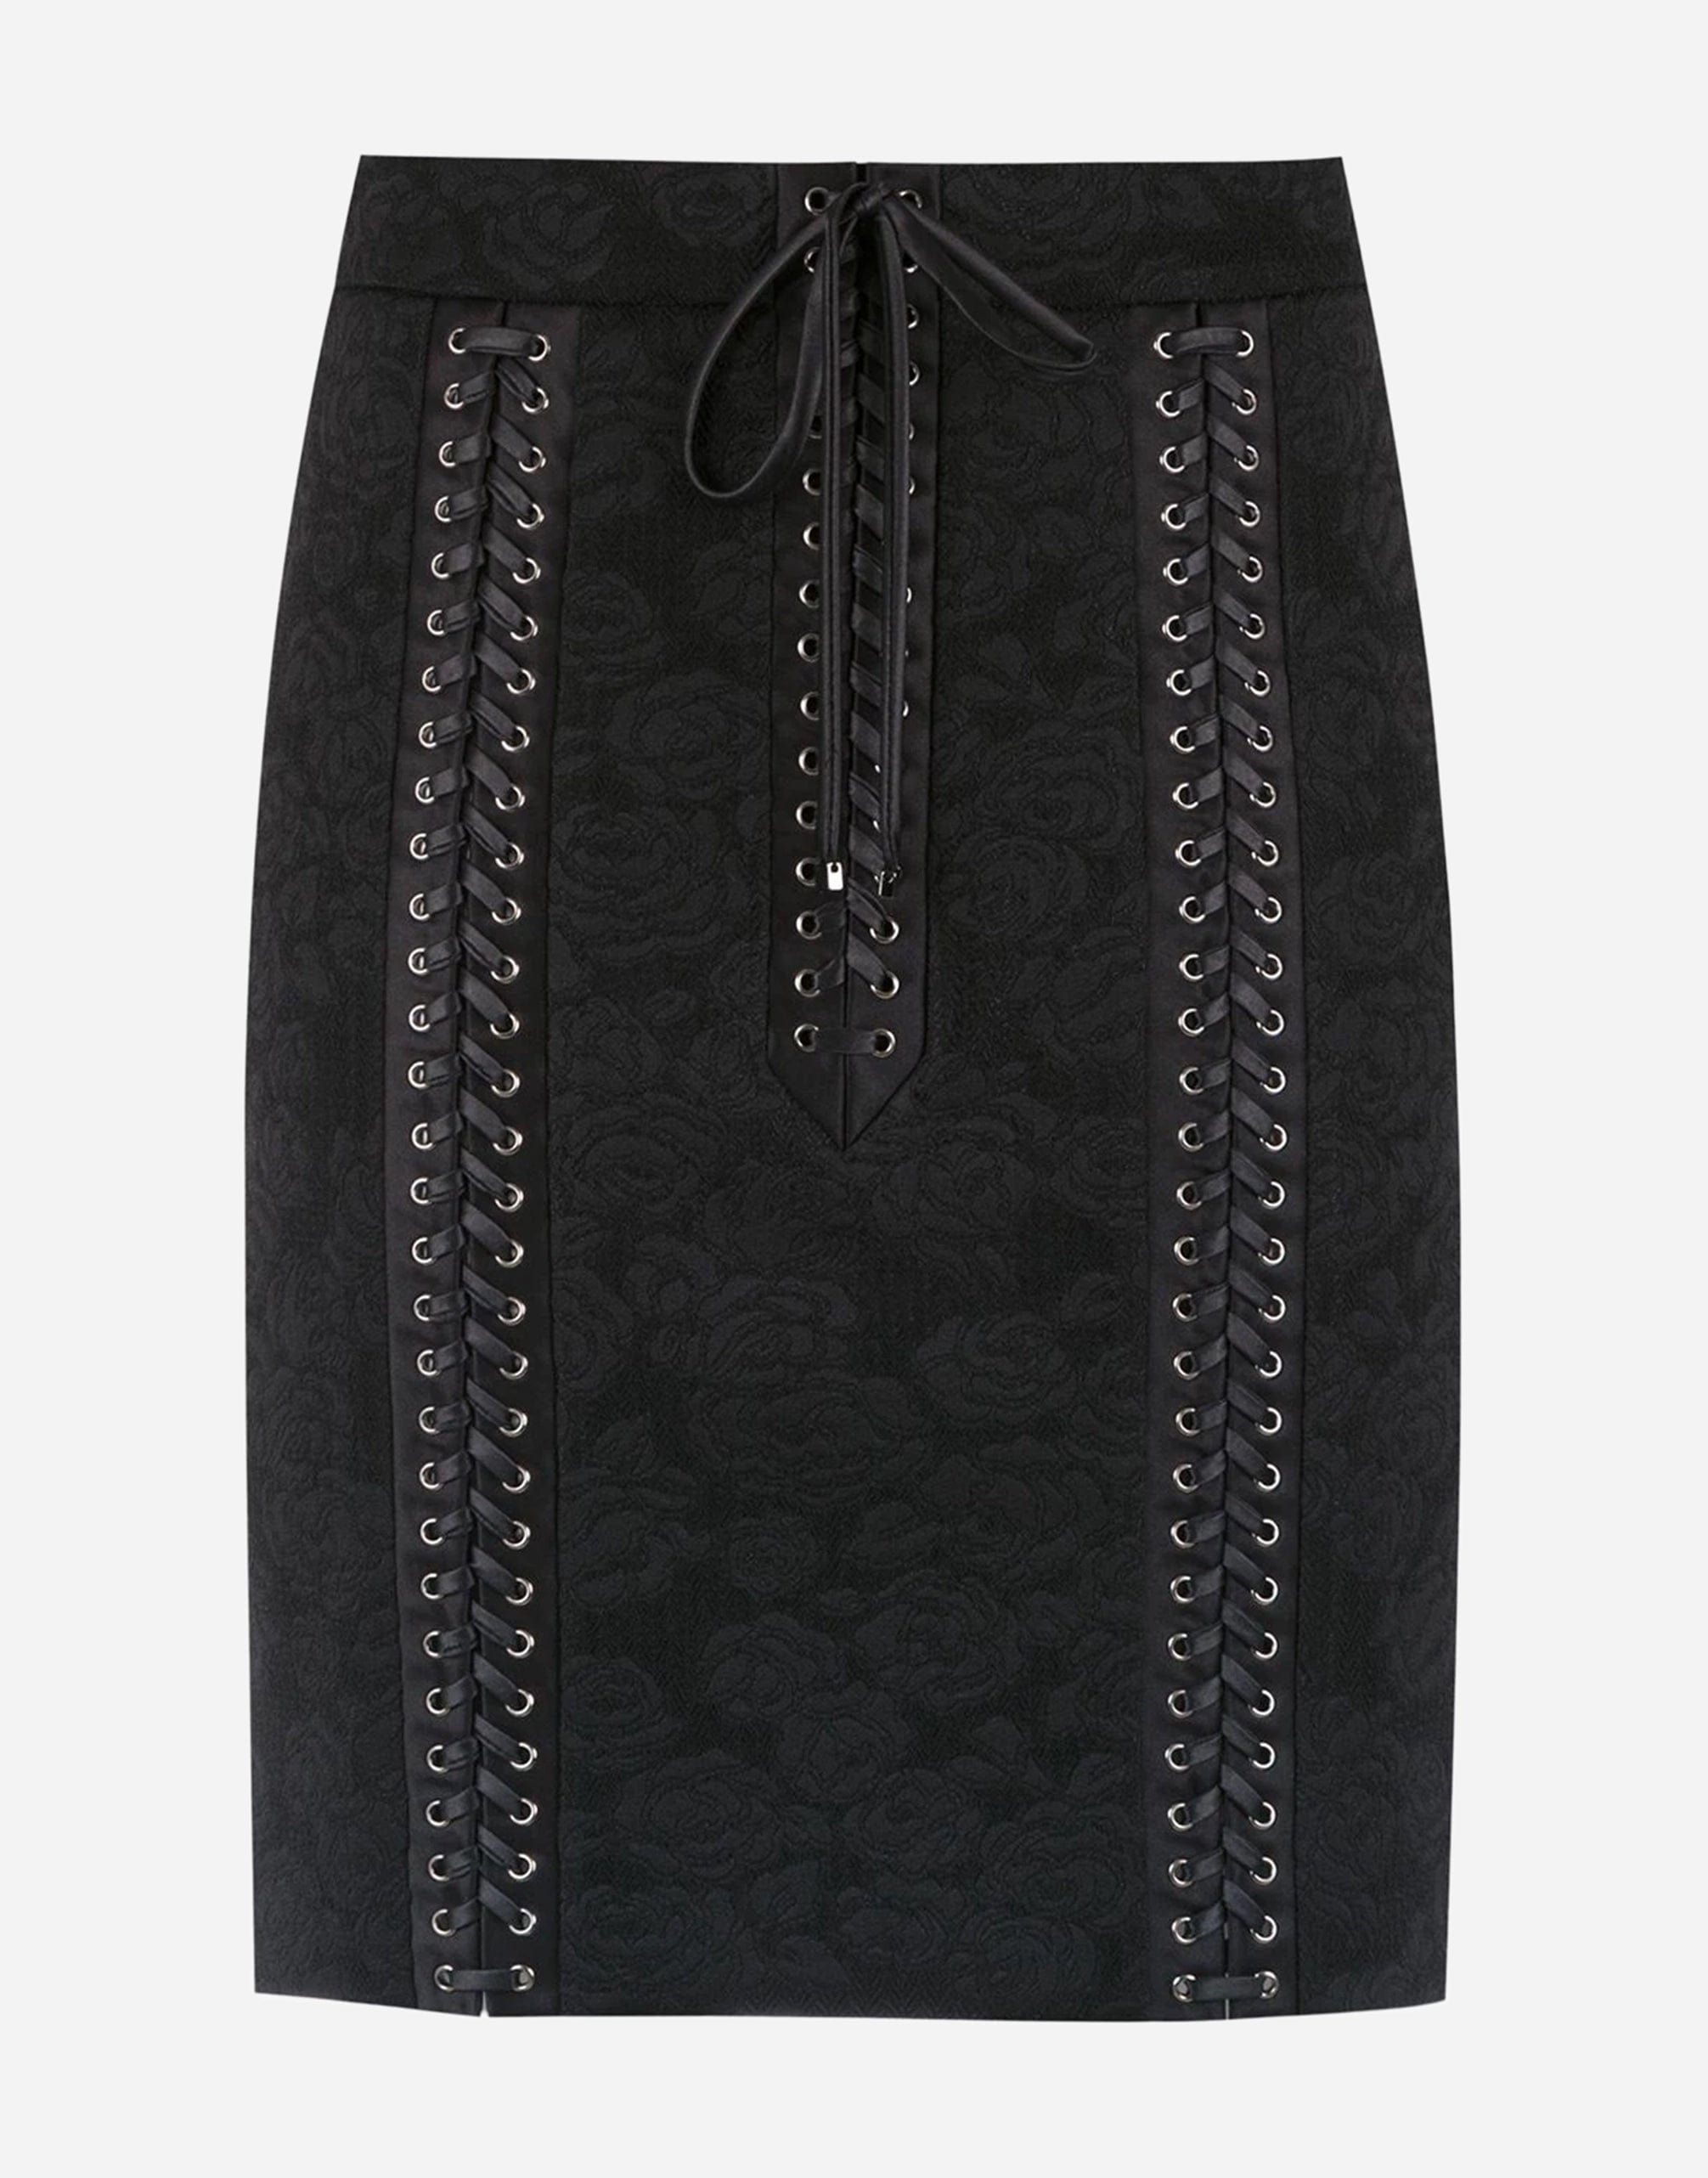 Dolce & Gabbana Jacquard Short Skirt